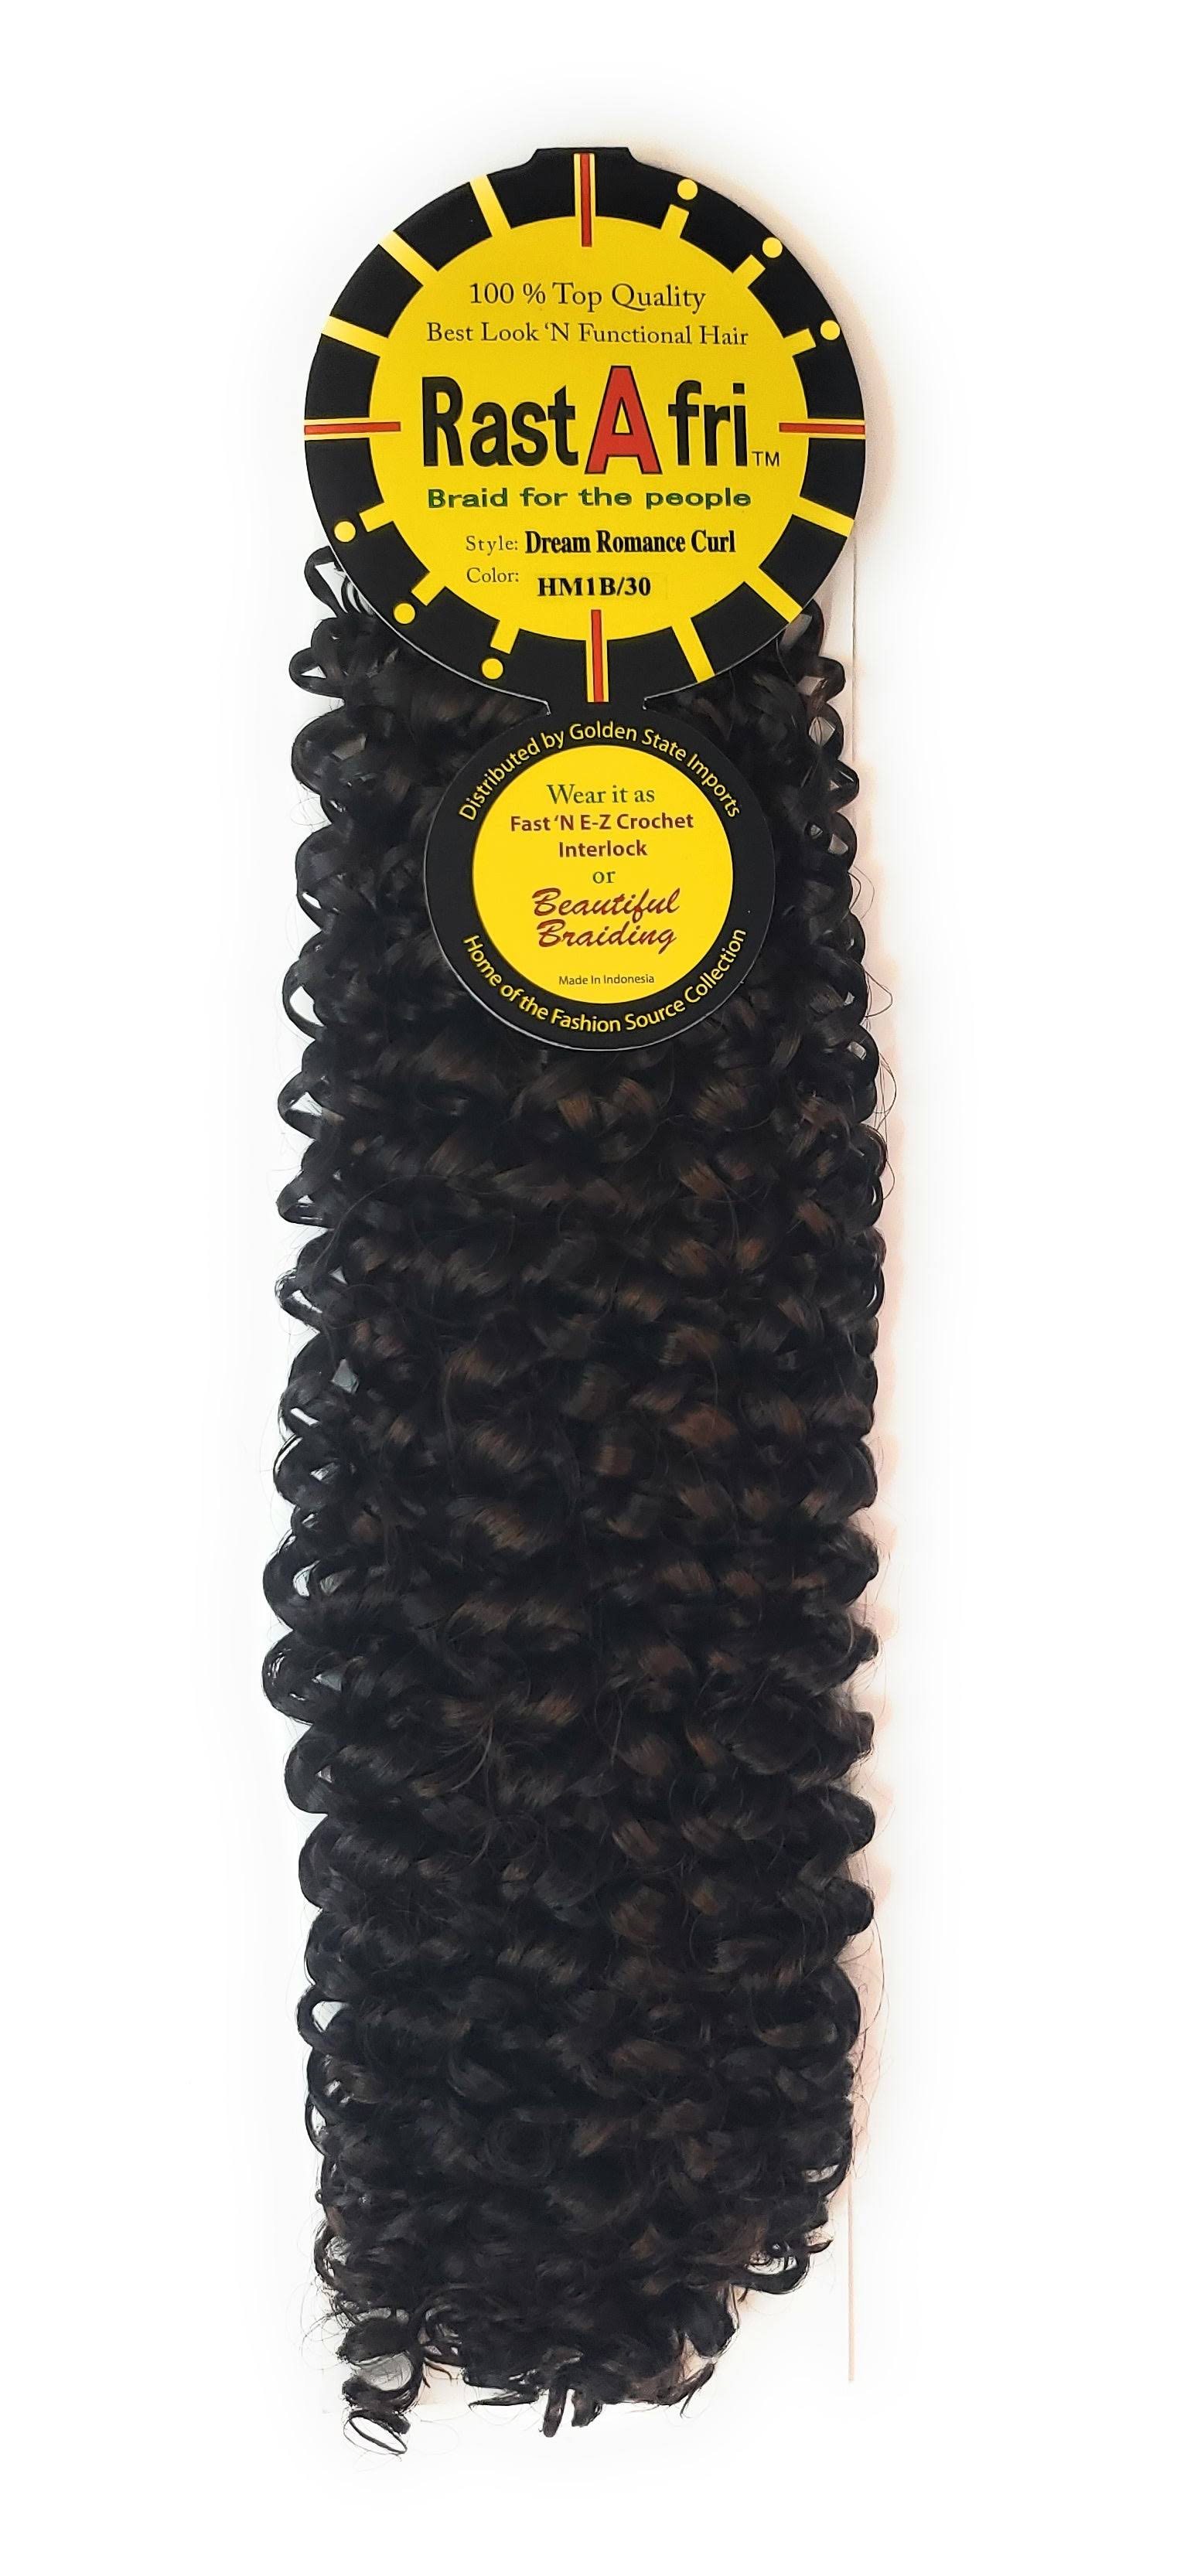 Rastafri Dream Romance Curl Braiding Hair (HM1B/ . Black/Light Auburn) | Haircare